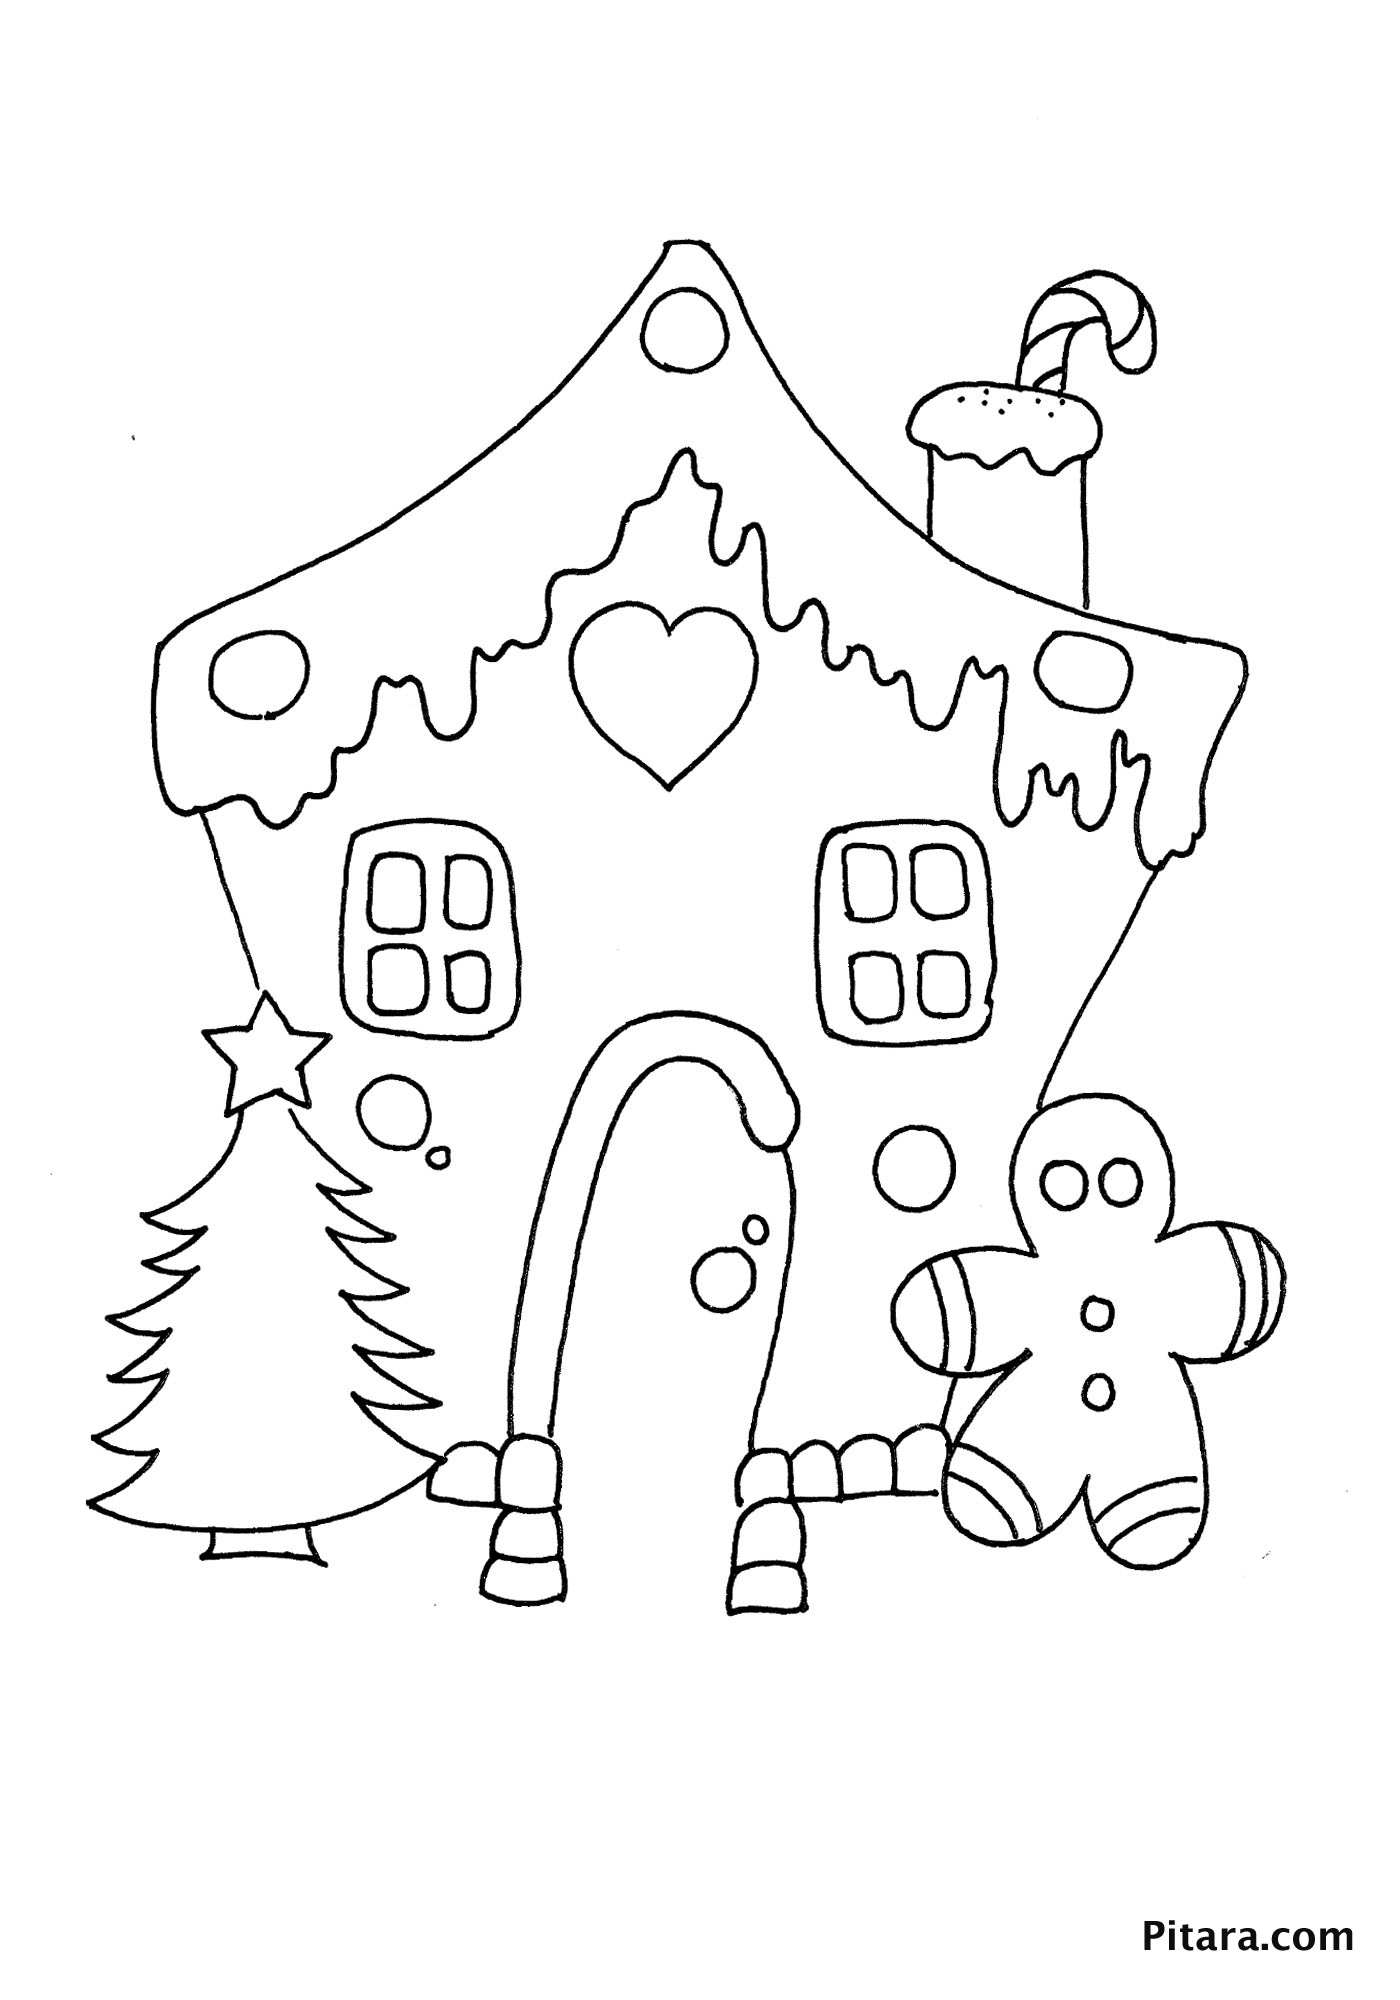 Christmas decorations – Coloring page | Pitara Kids Network